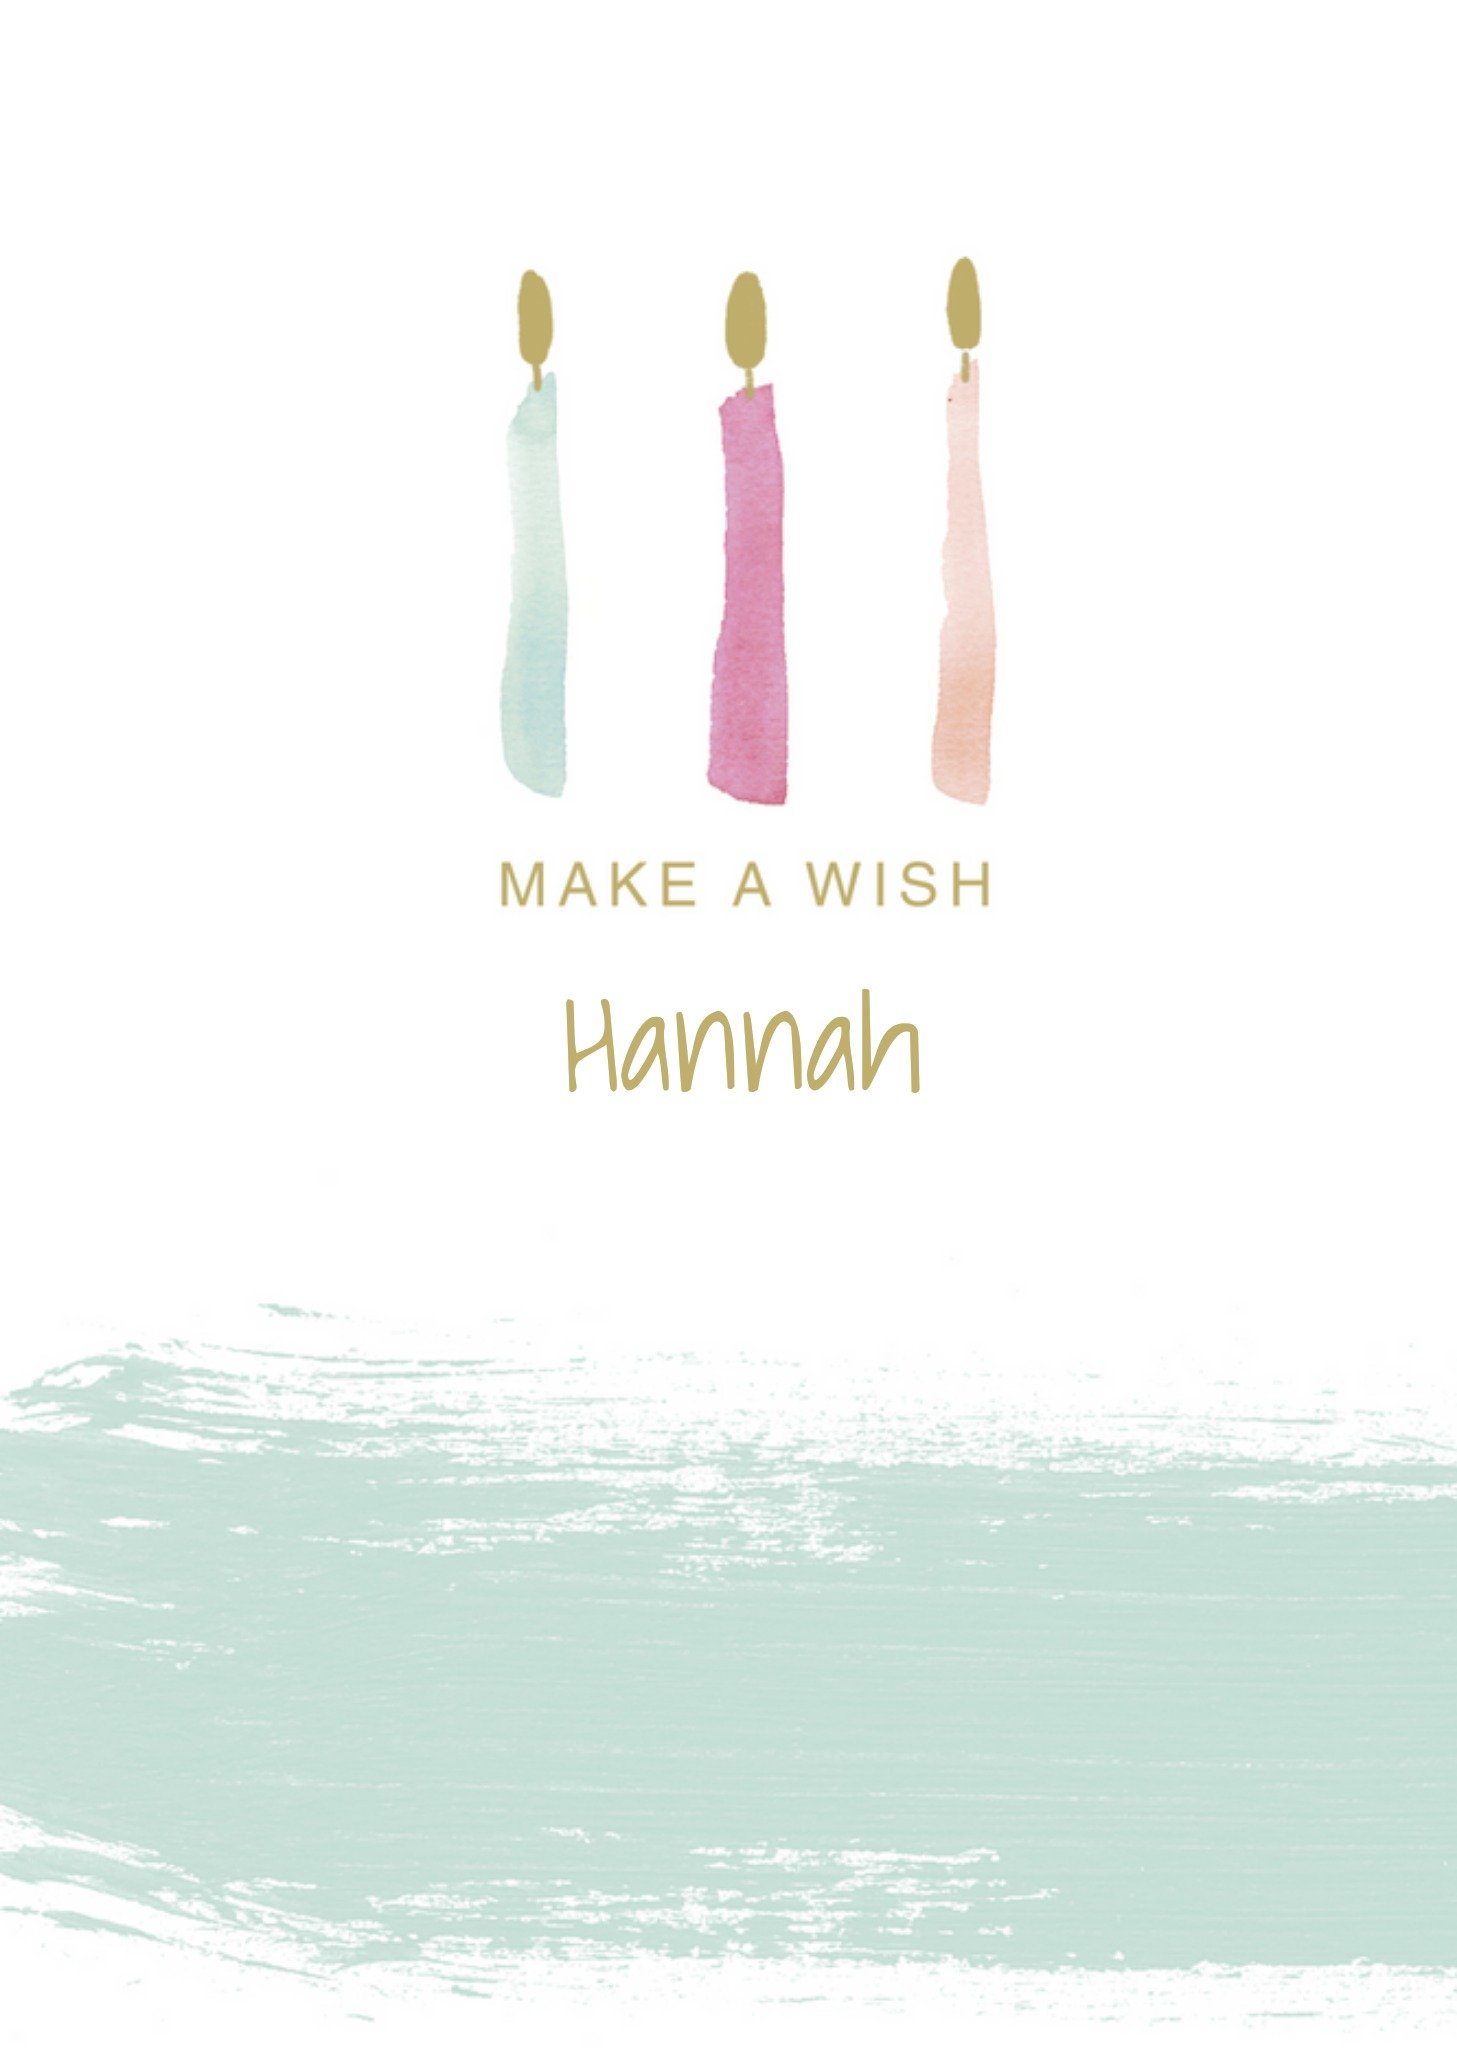 UK Greetings - Make a wish - Eigen naam